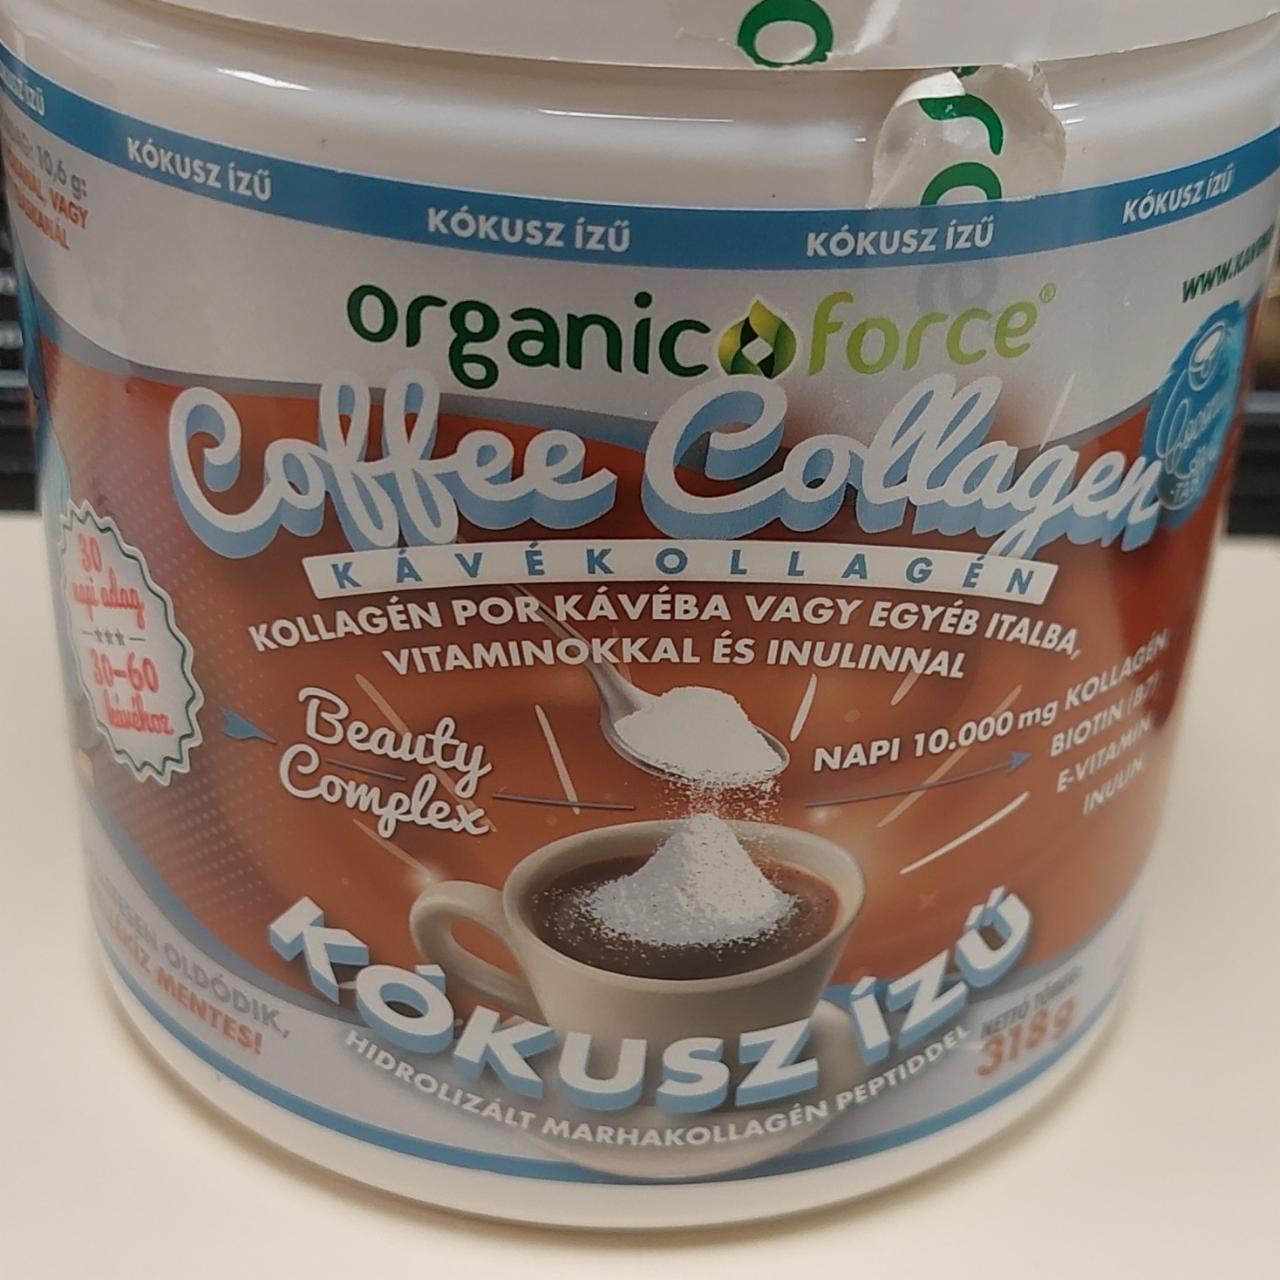 Képek - Coffe collagen Organic Force